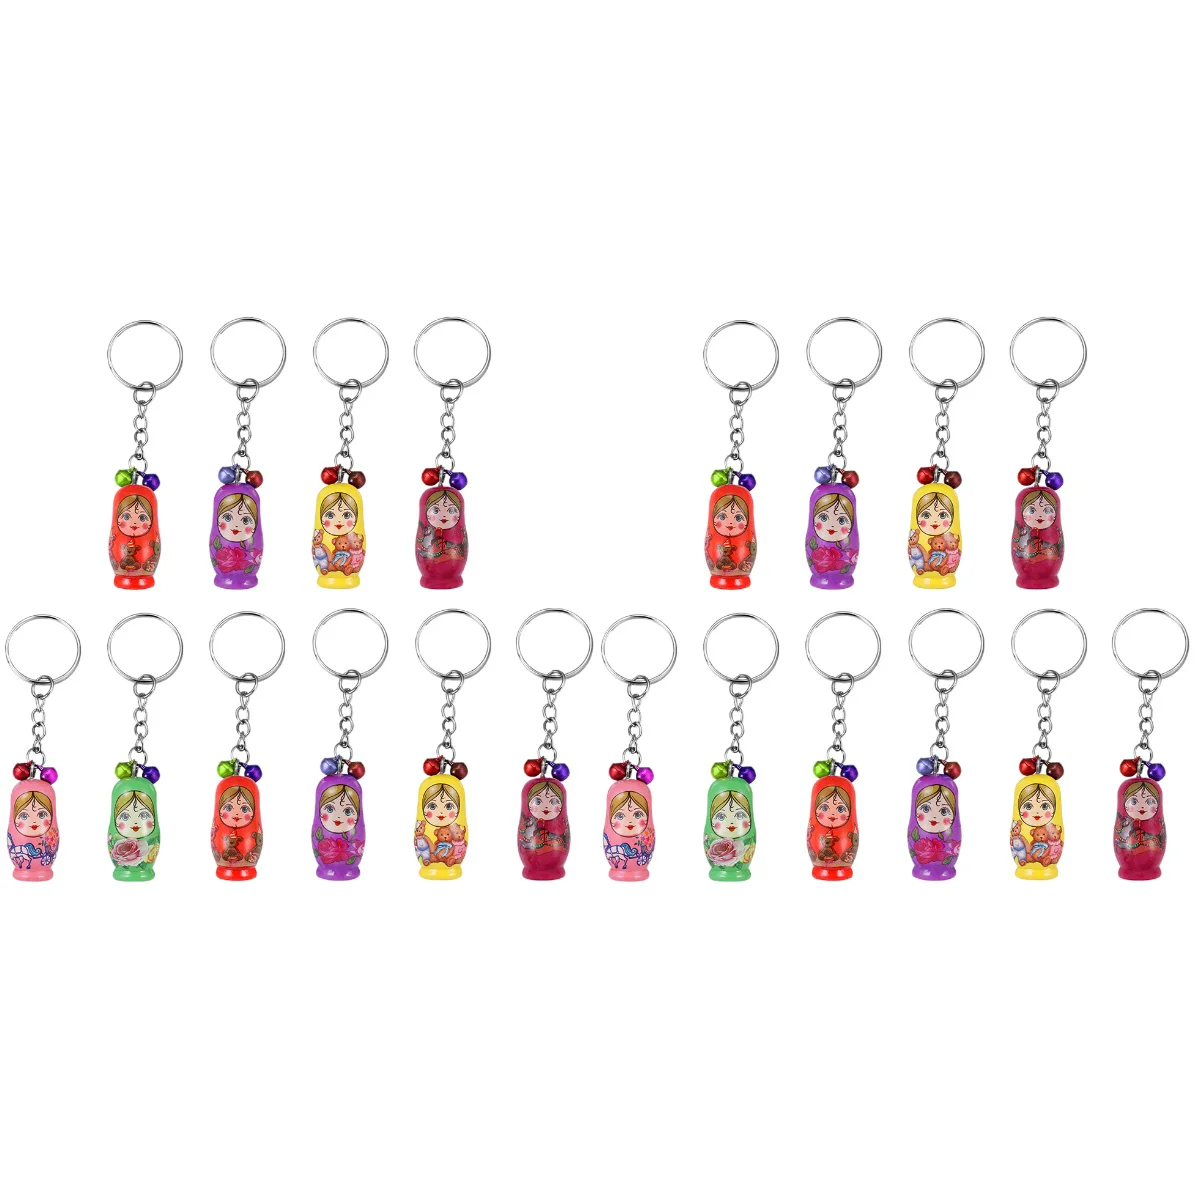 

72 Pcs Key Chain Wood Matryoshka Chains Mini Purse Backpack Colored Paint Pendant Keychain Car Keys Russian Dolls Rings Wooden